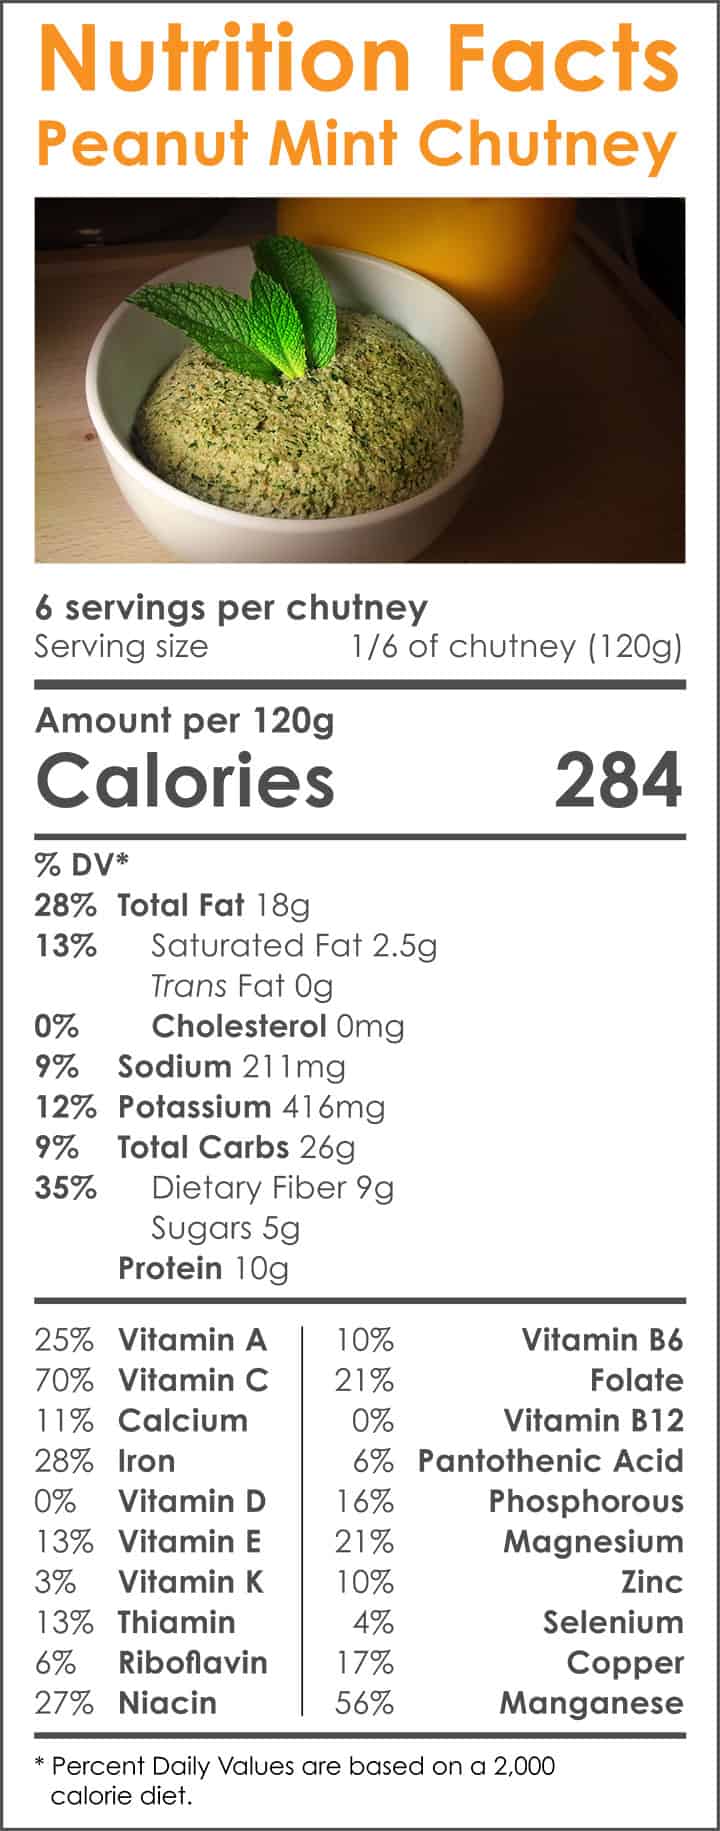 Peanut mint chutney nutrition facts. | secretsofcooking.com